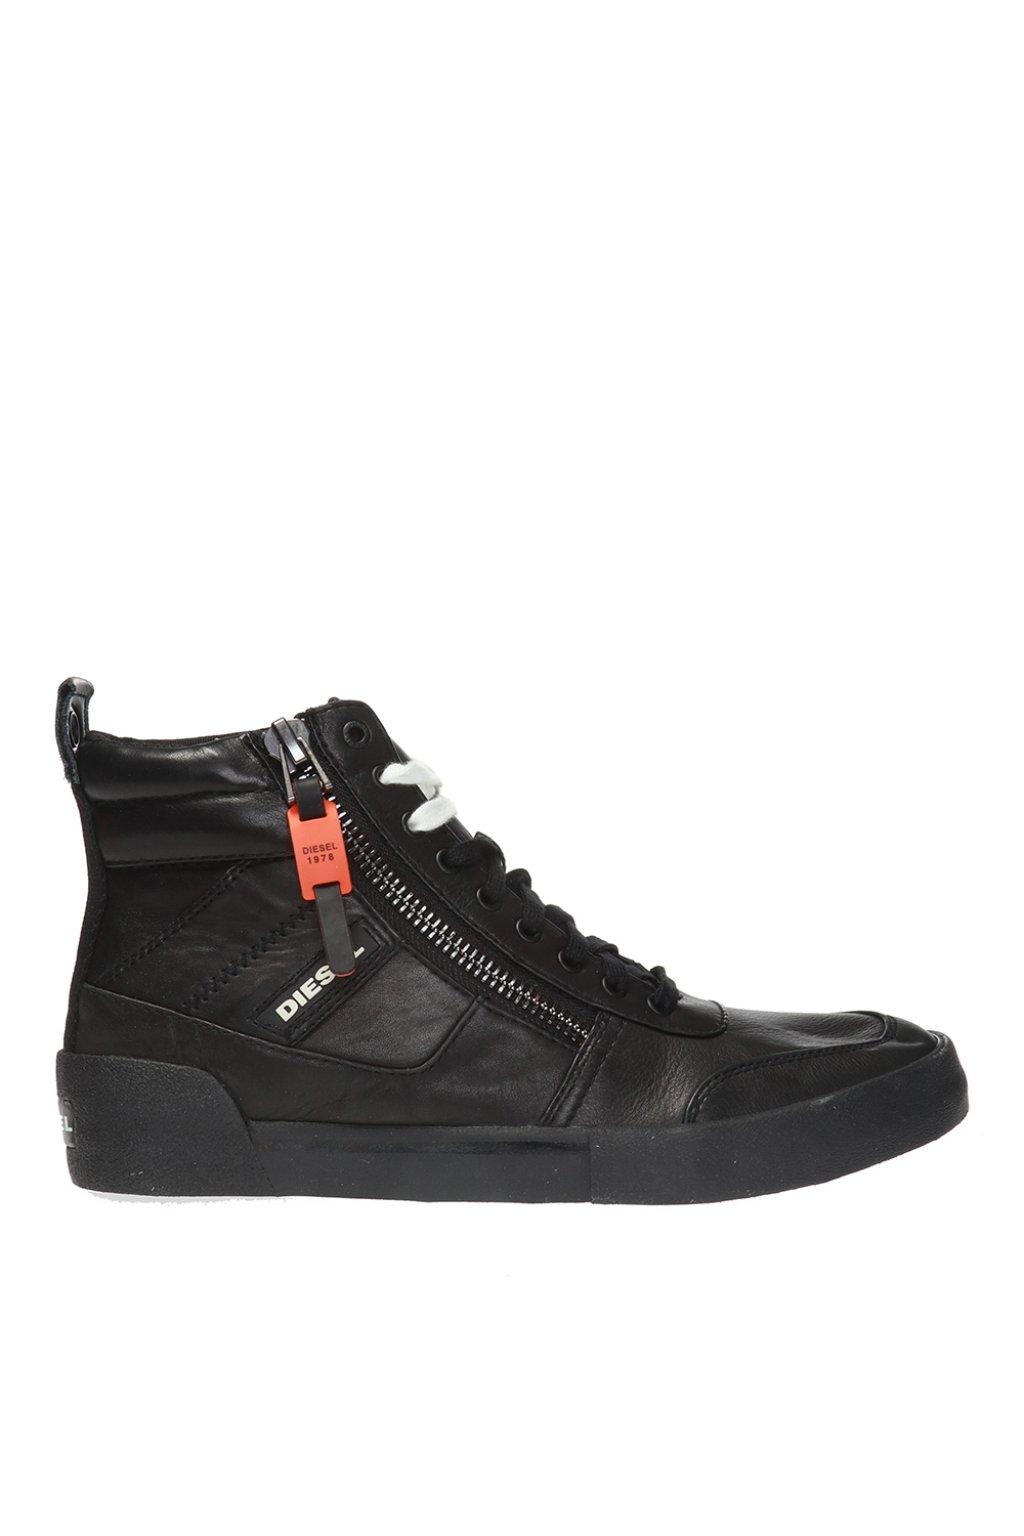 DIESEL Leather Black S-dvelows High-top Sneakers for Men | Lyst